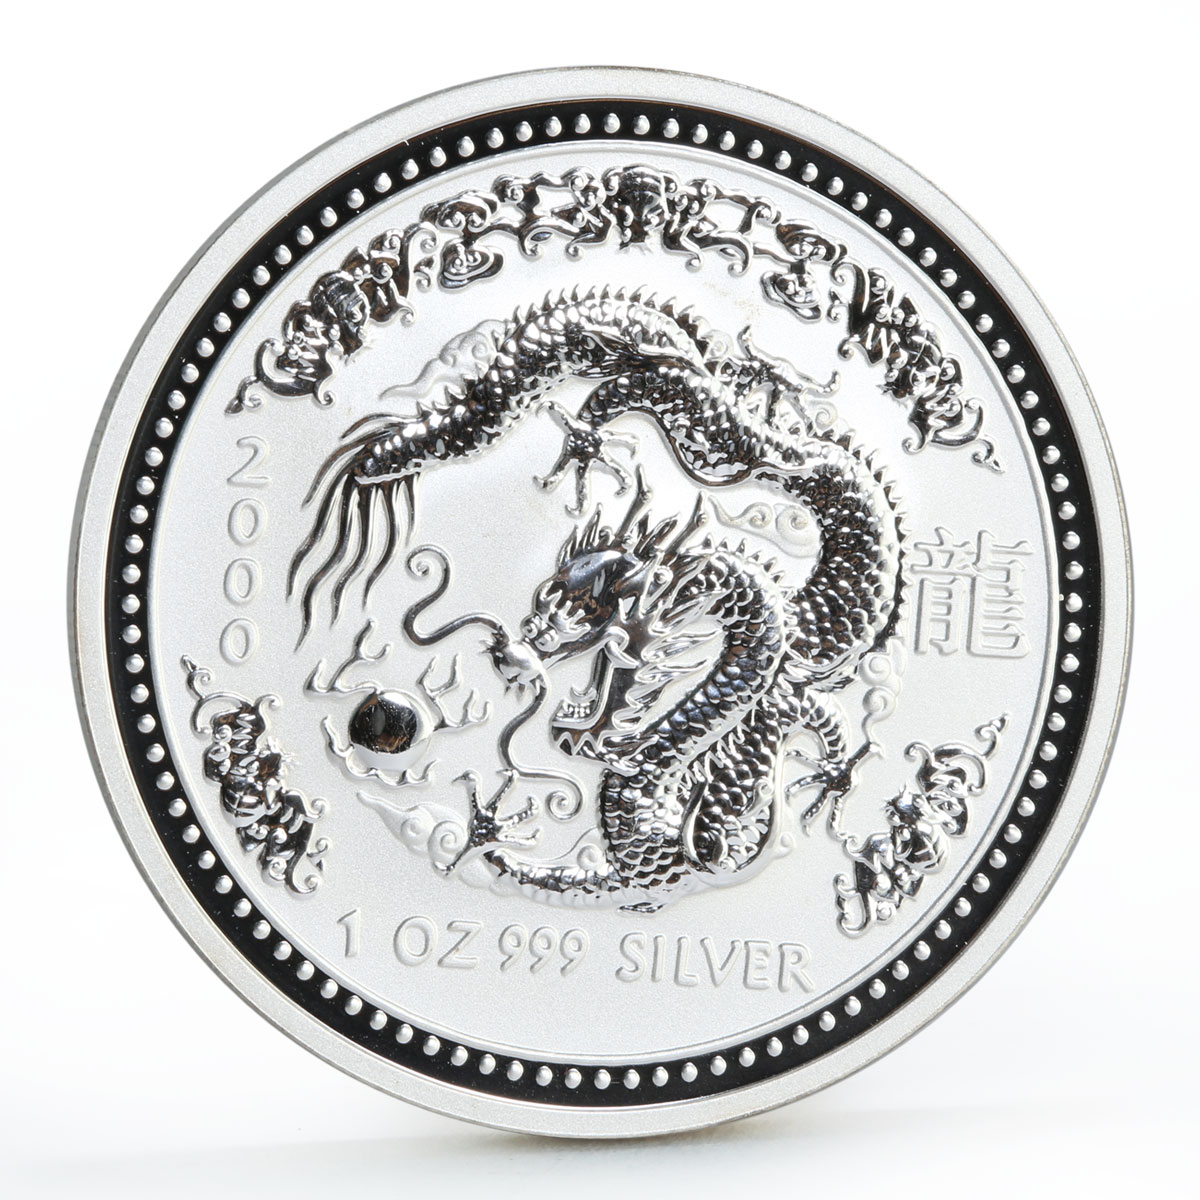 Australia 1 dollar Lunar Calendar series I Year of the Dragon silver coin 2000